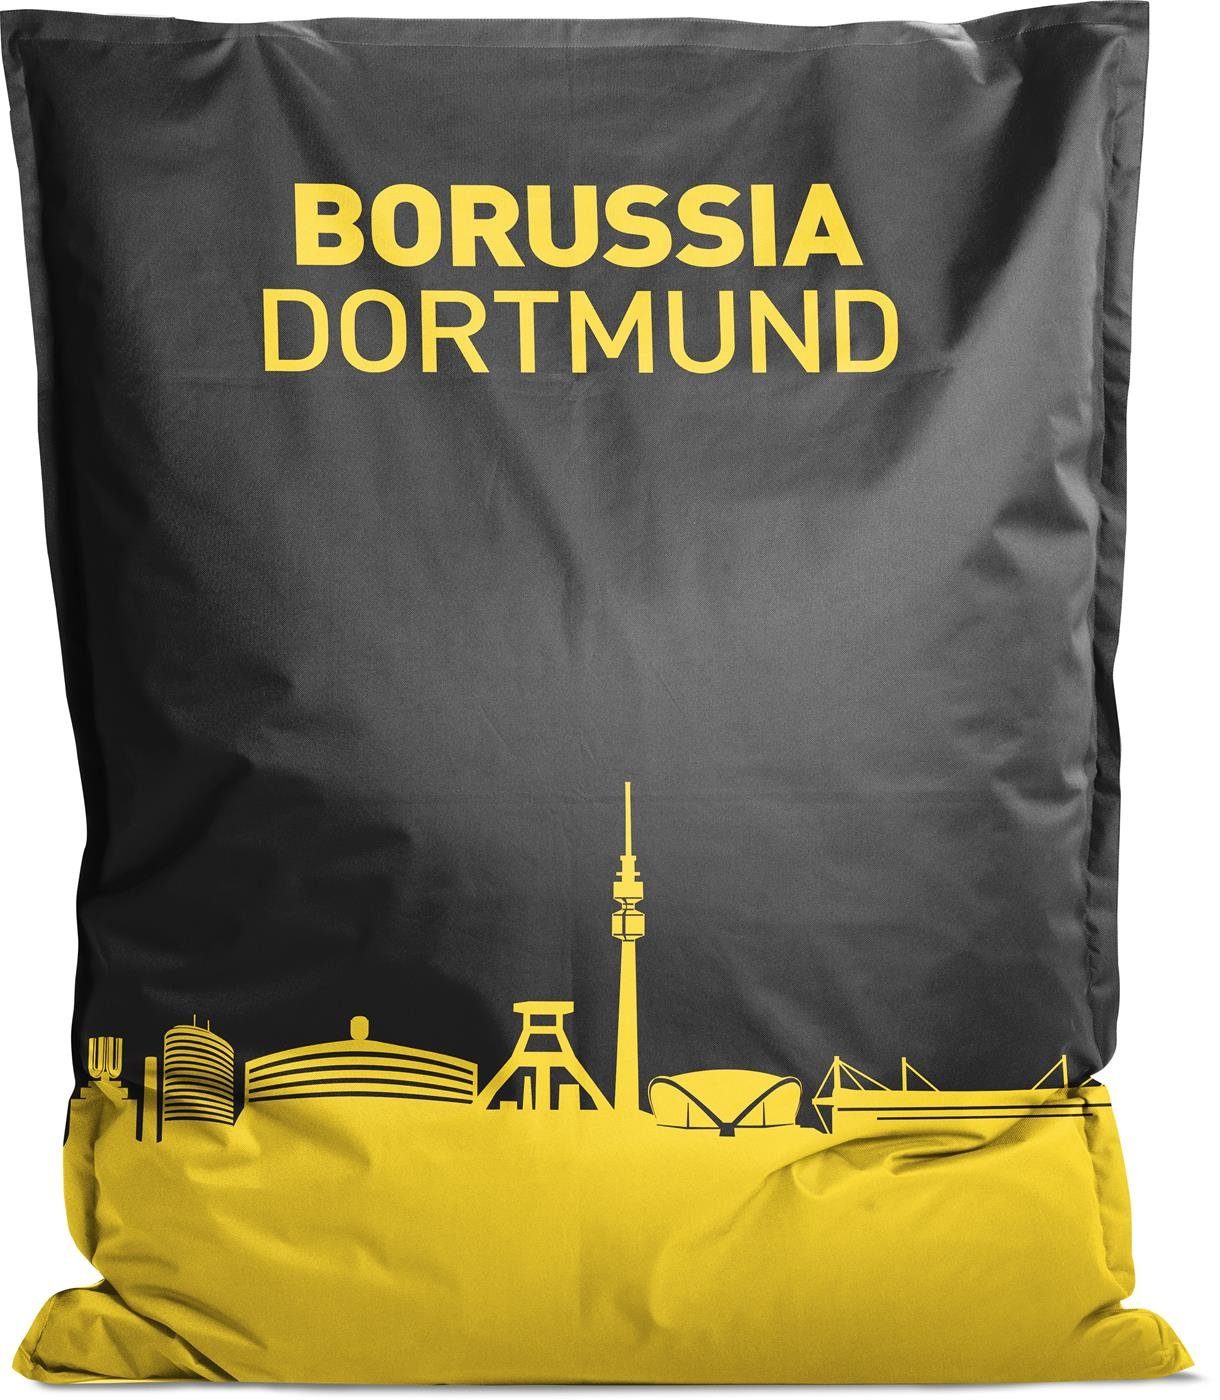 Borussia Dortmund), Magma (1 waschbar Bezug Sitzsack Sitzsack Heimtex St., BVB BigBag VIP